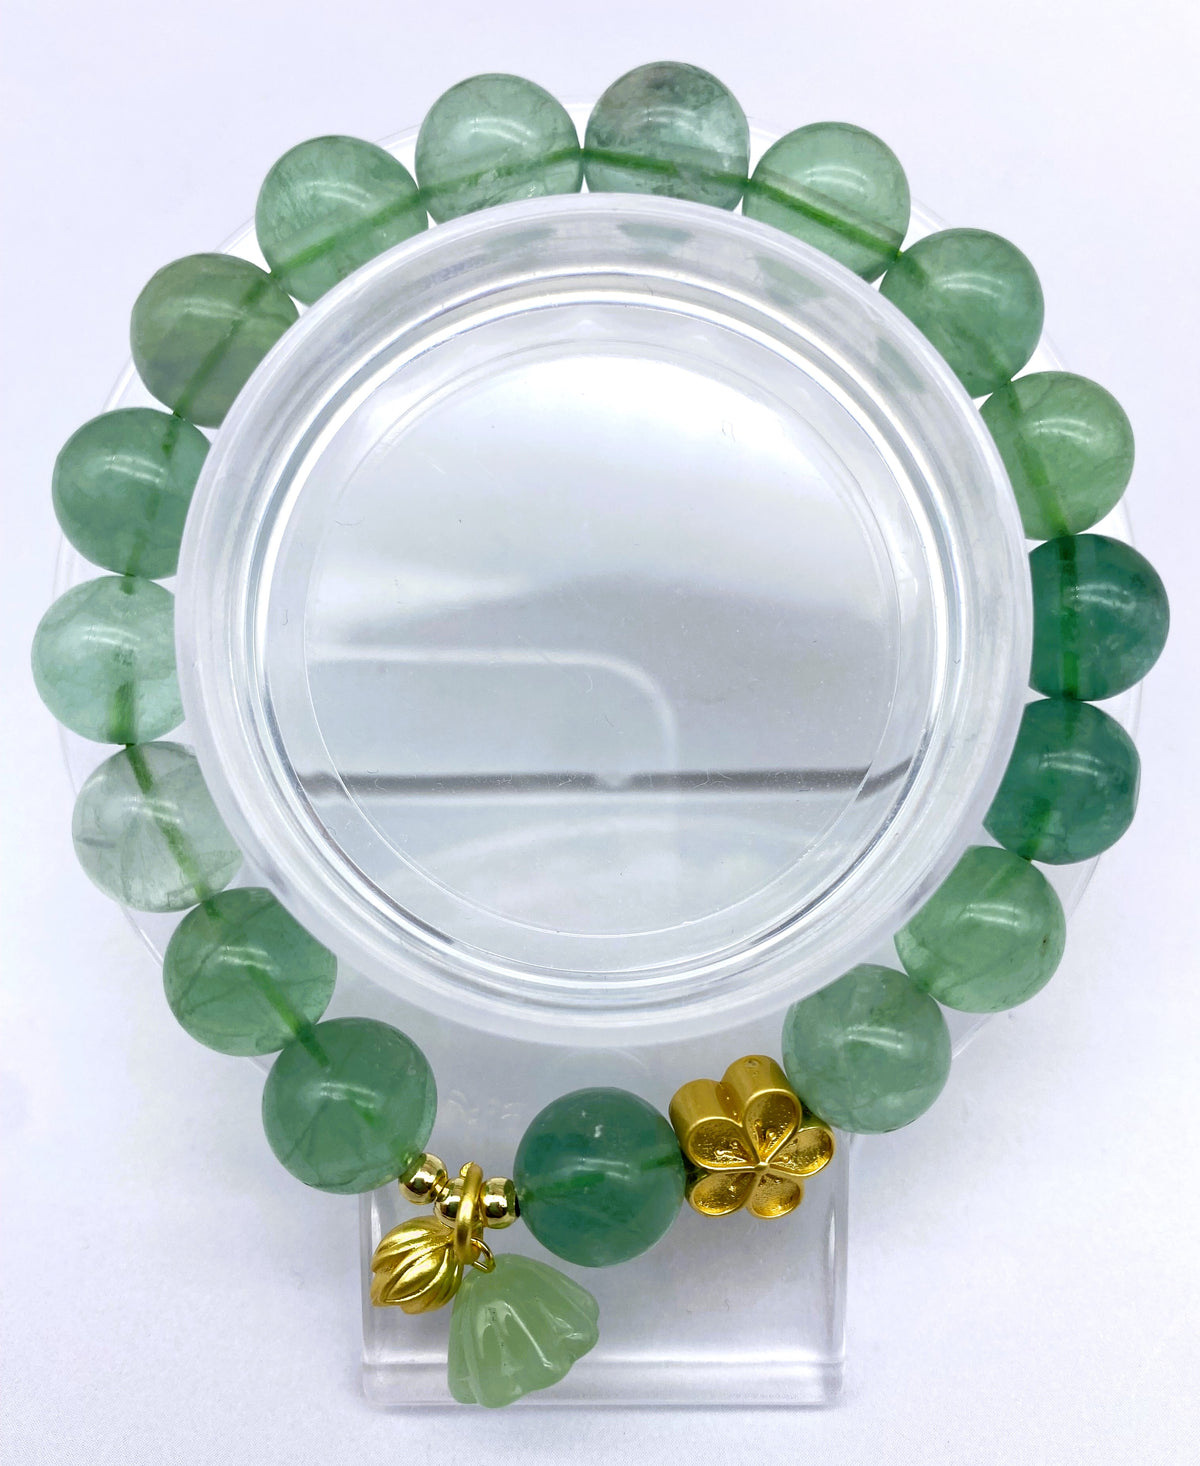 Unique Design Fluorite Semi Precious Gemstones 10mm 8mm Round Beads Crystal Stretch Bracelets 7.5 Inch Unisex